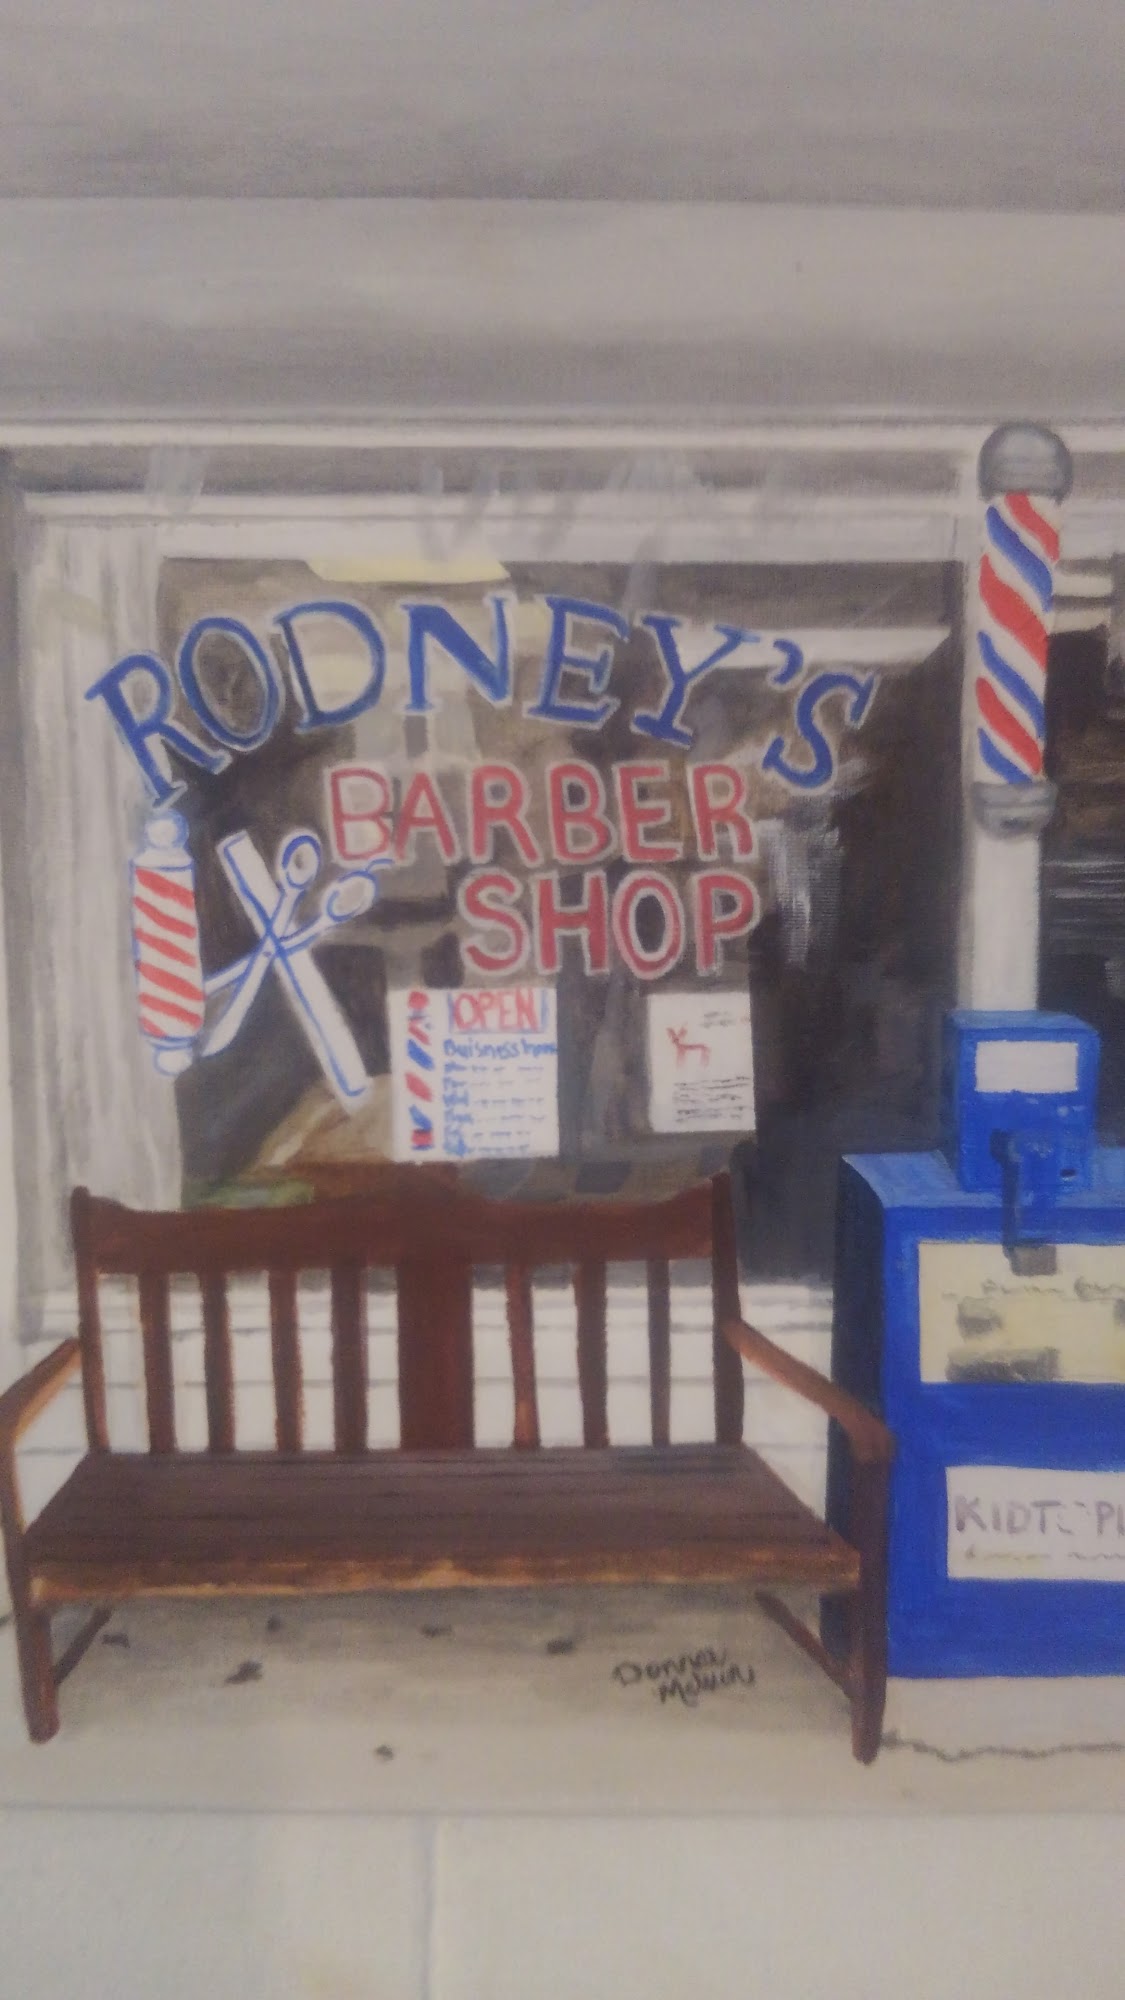 Rodney's Barber Shop 12189 NC-211 Business, Bladenboro North Carolina 28320